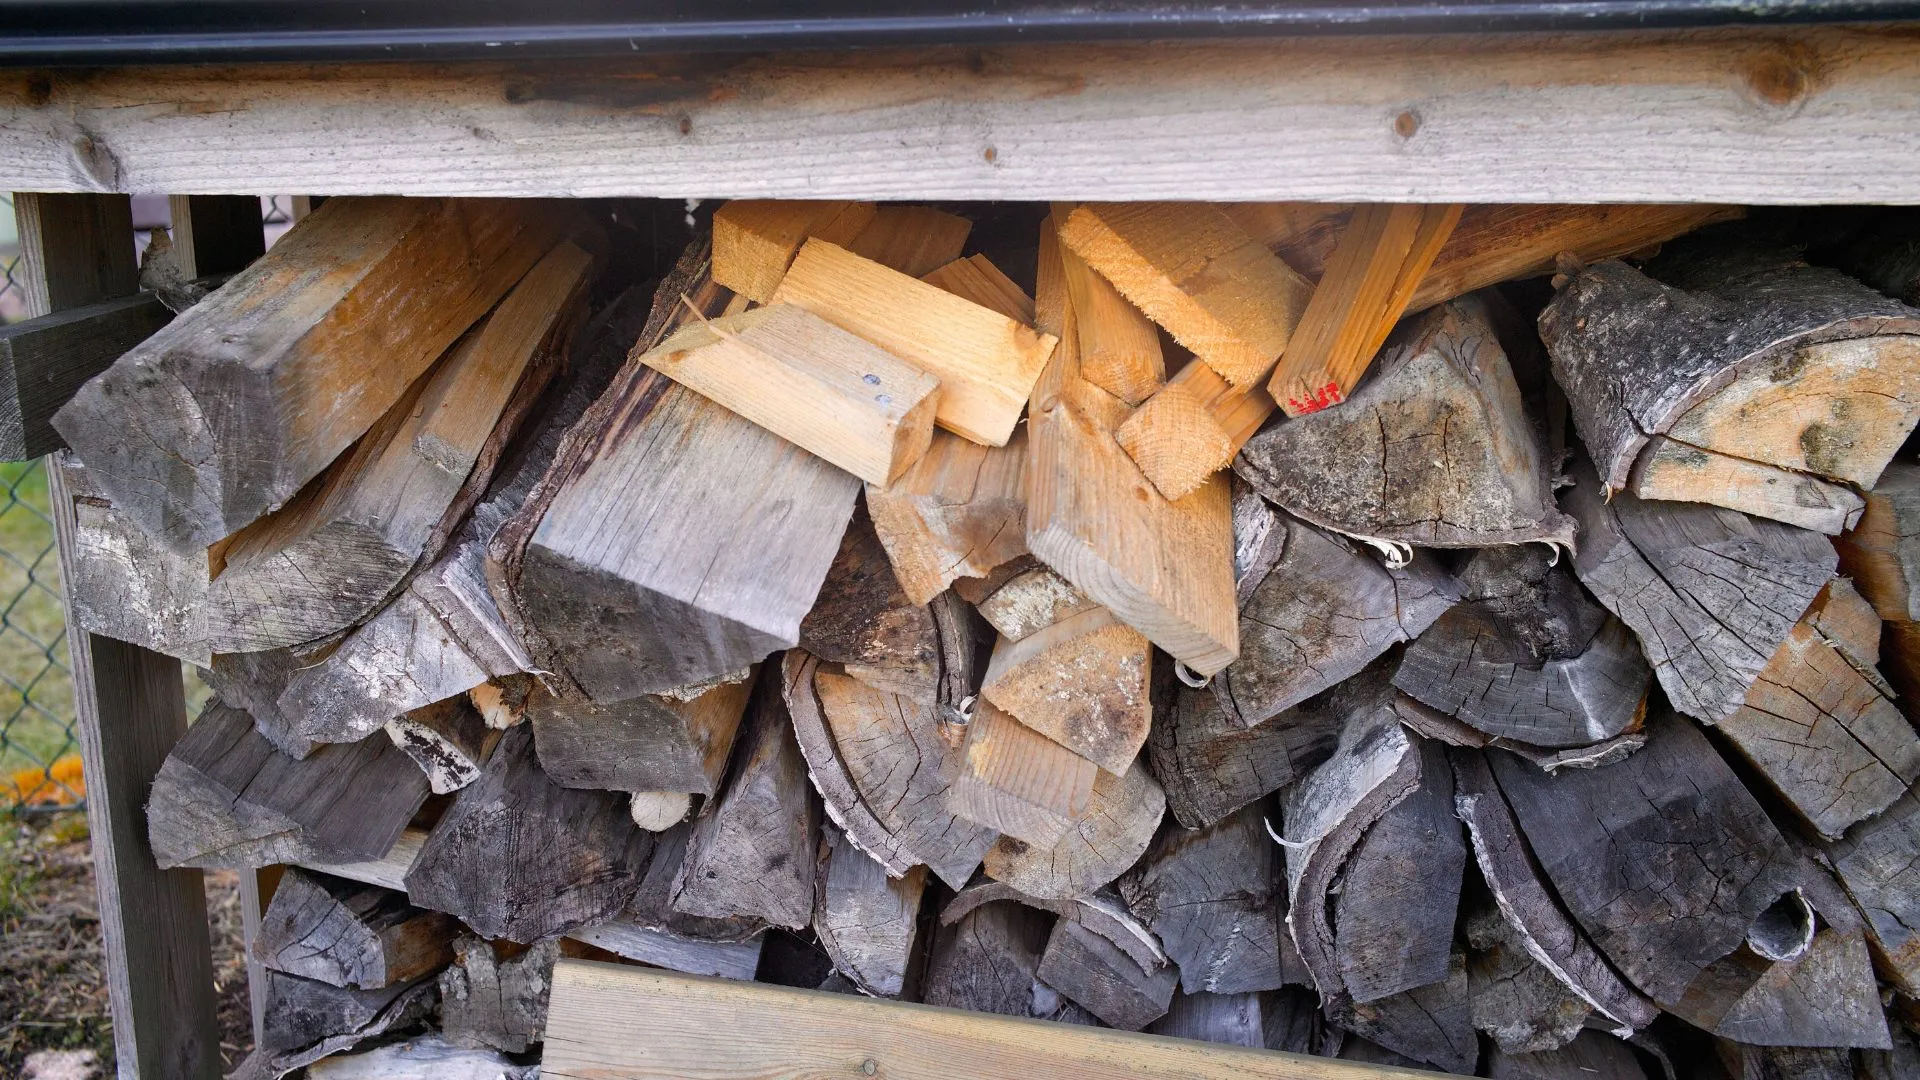 driftwood firewood